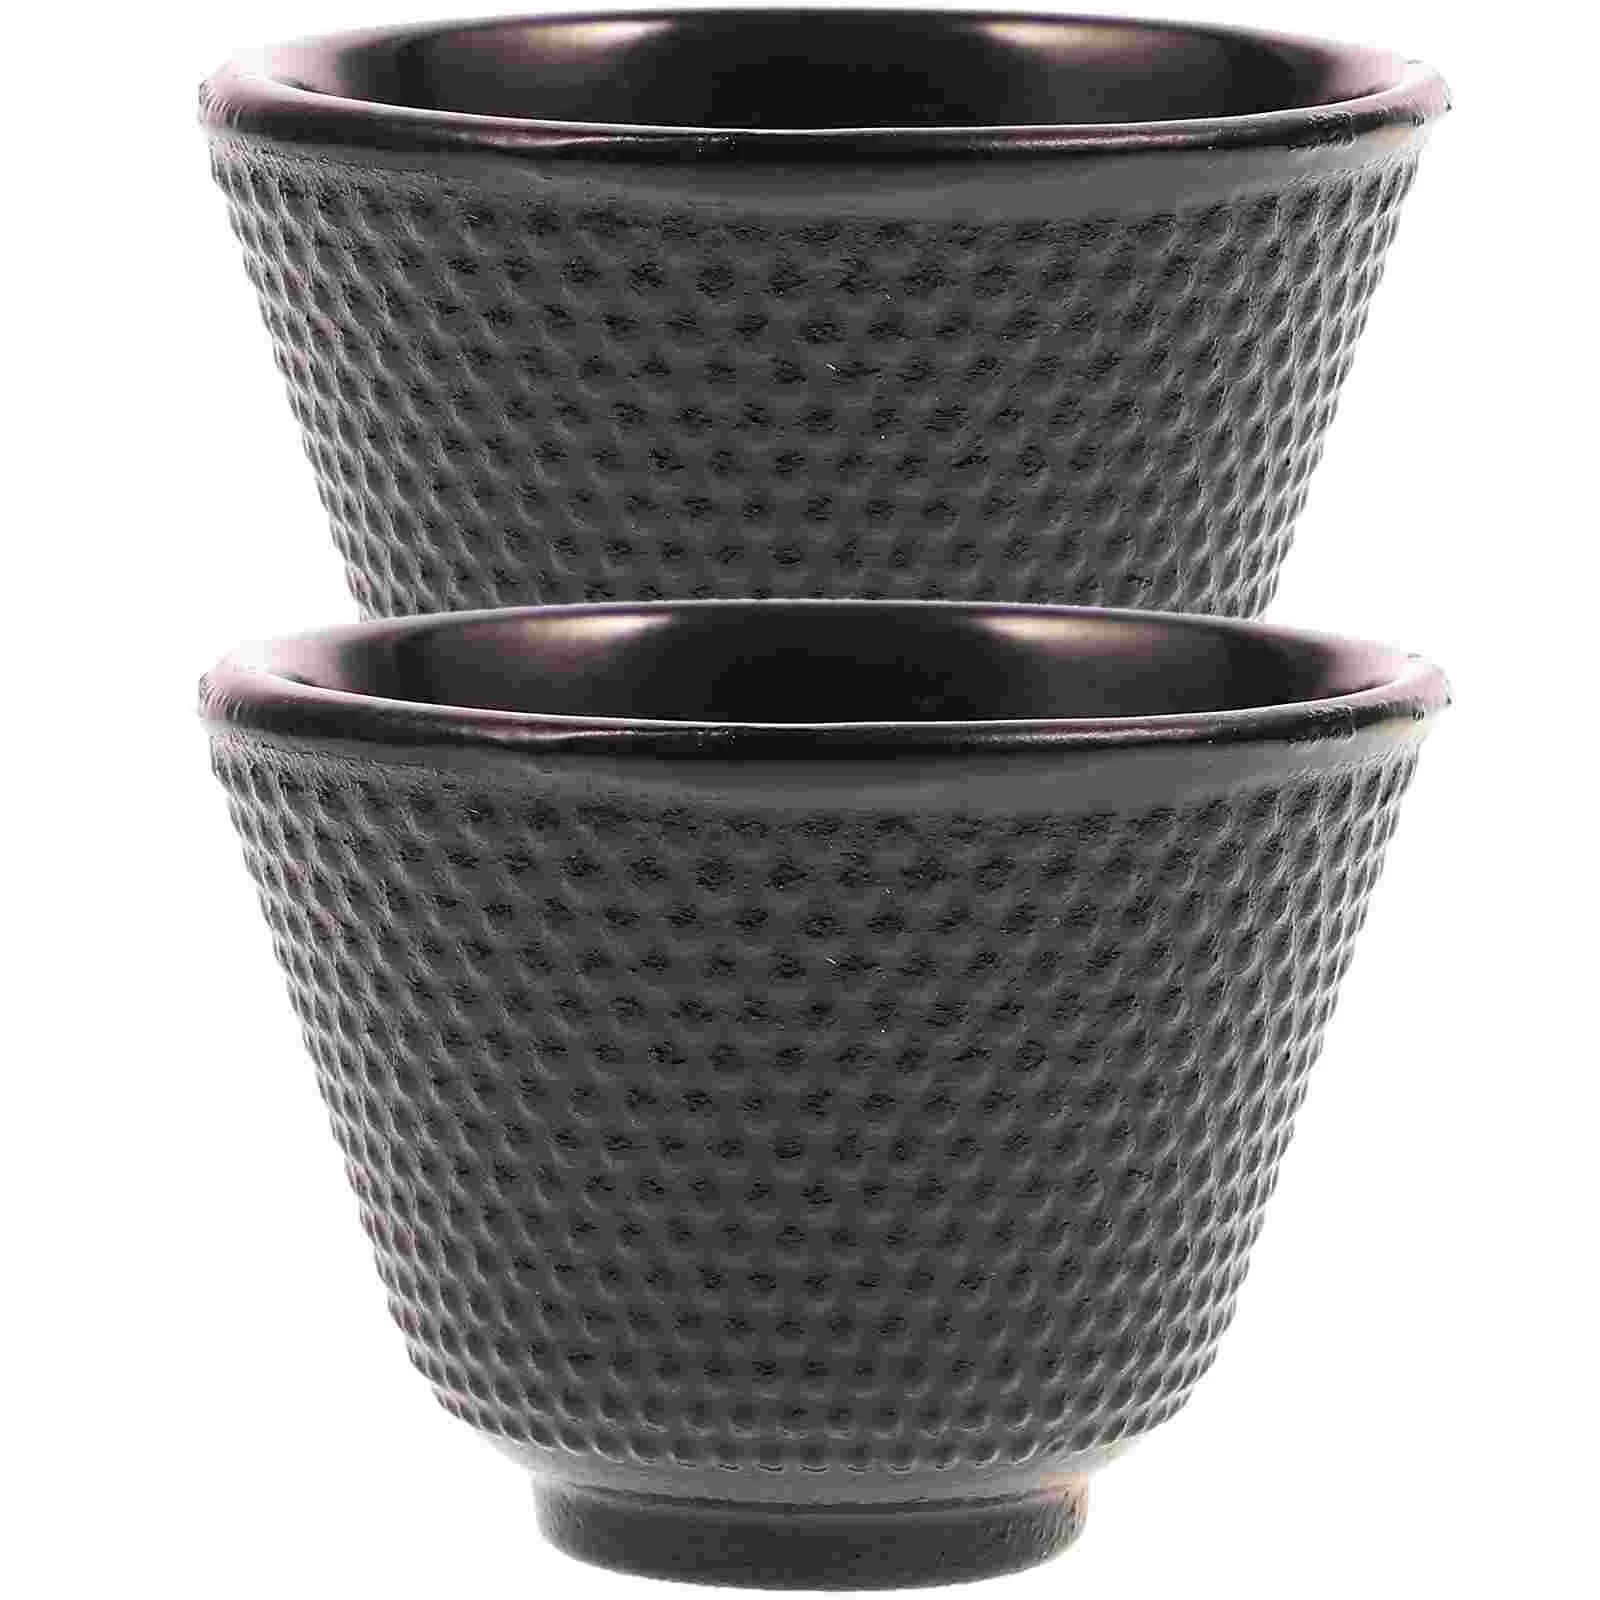 

2 Pcs Cast Iron Teacup Japanese Style Teaware Ceramic Coasters Retro Drinking Glasses Creative Mug